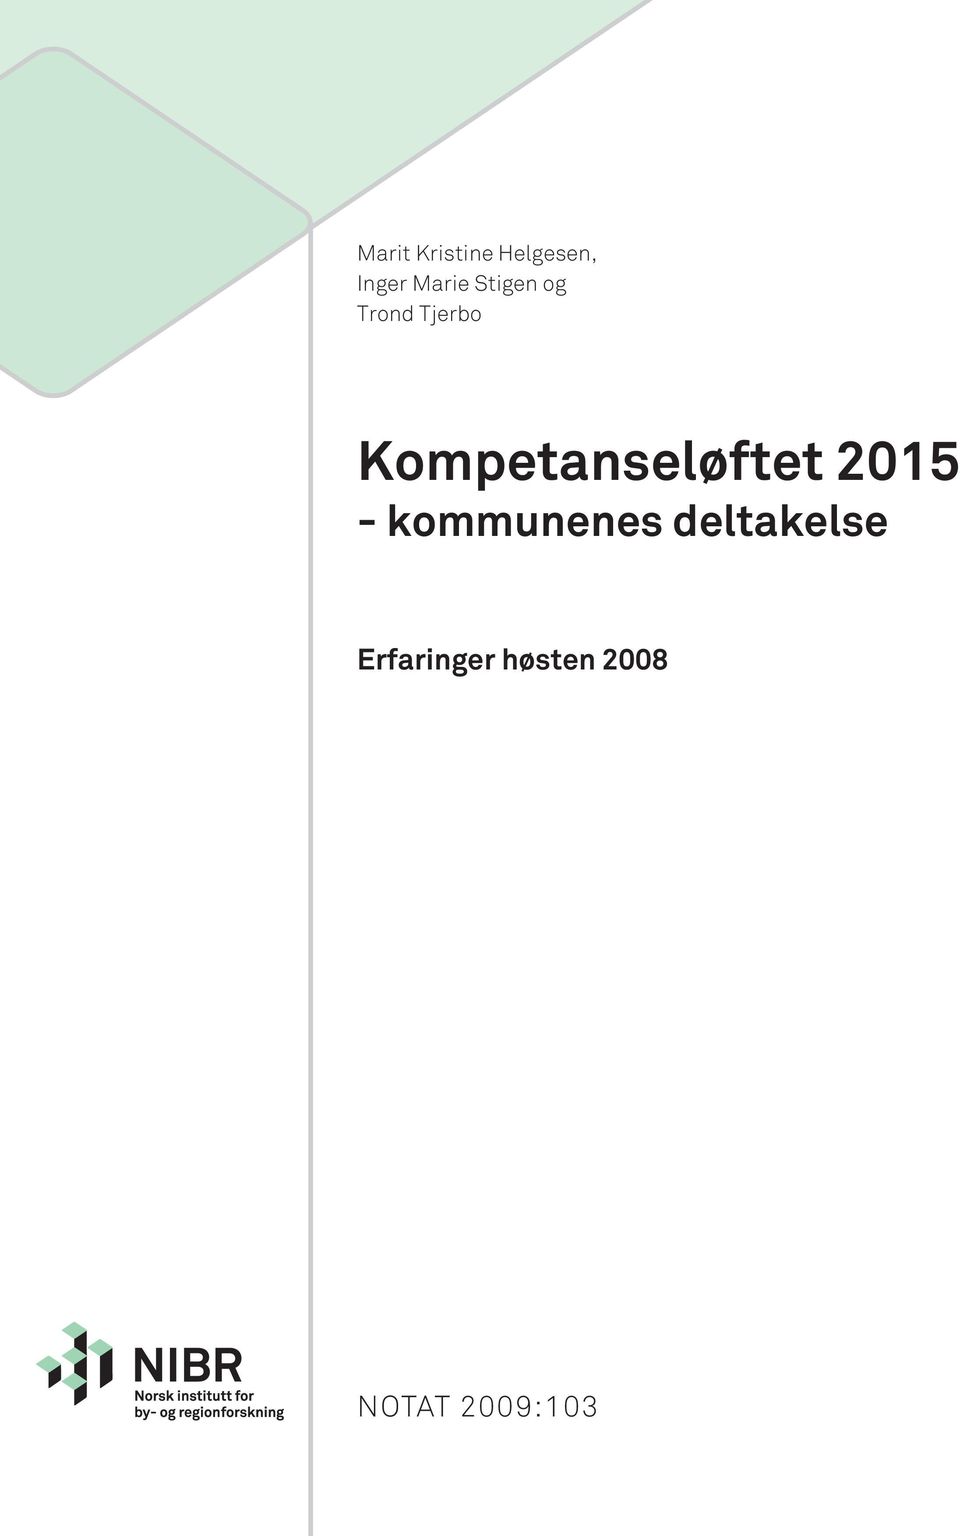 Kompetanseløftet 2015 - kommunenes